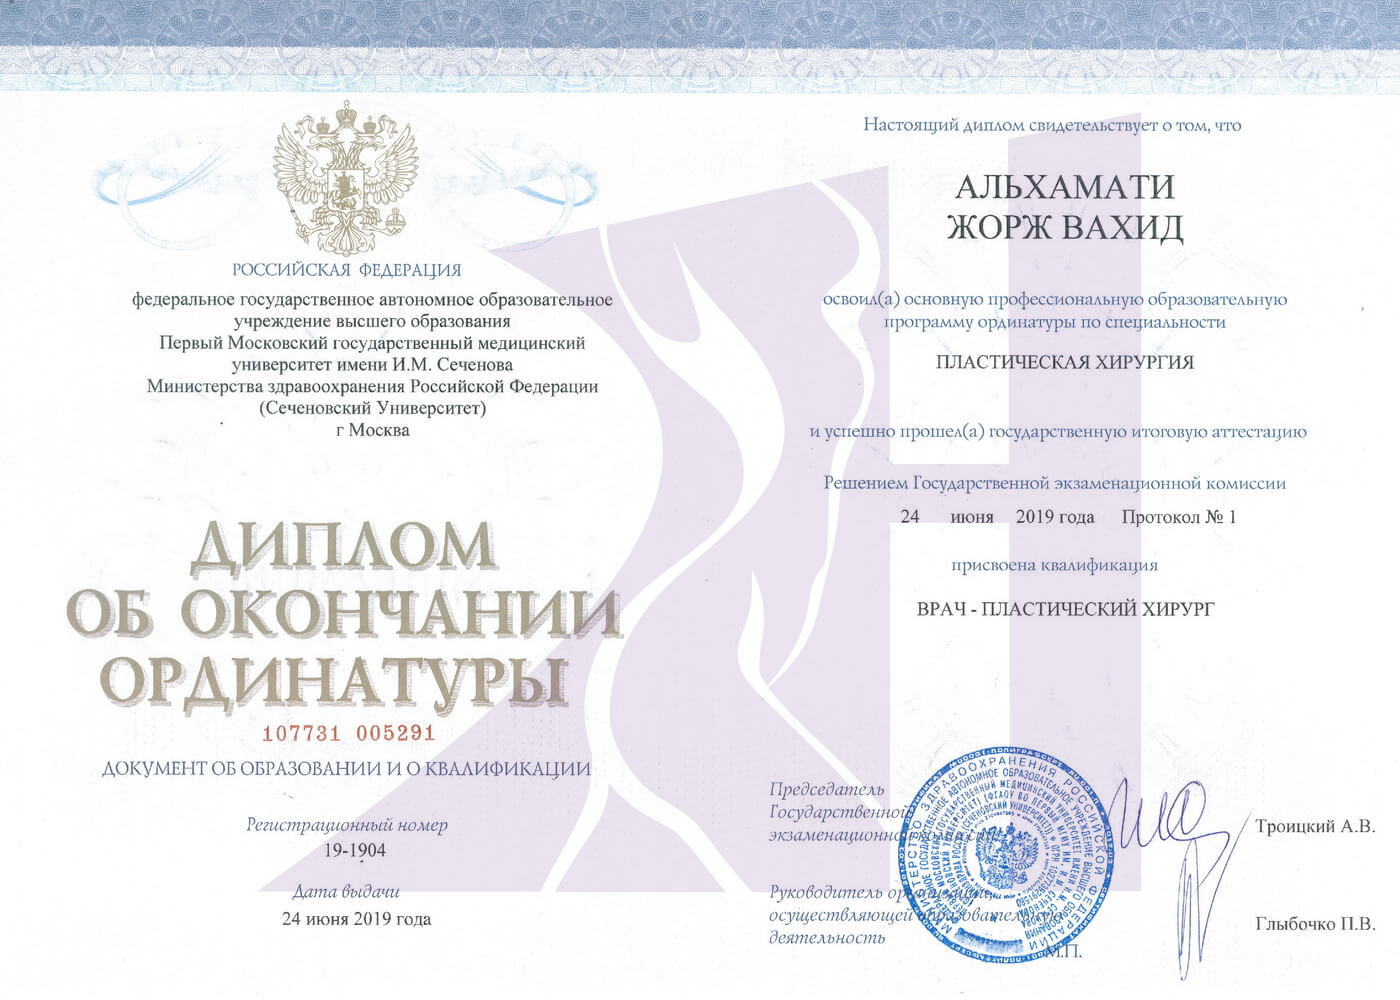 Diplomas and certificates (Hamati)